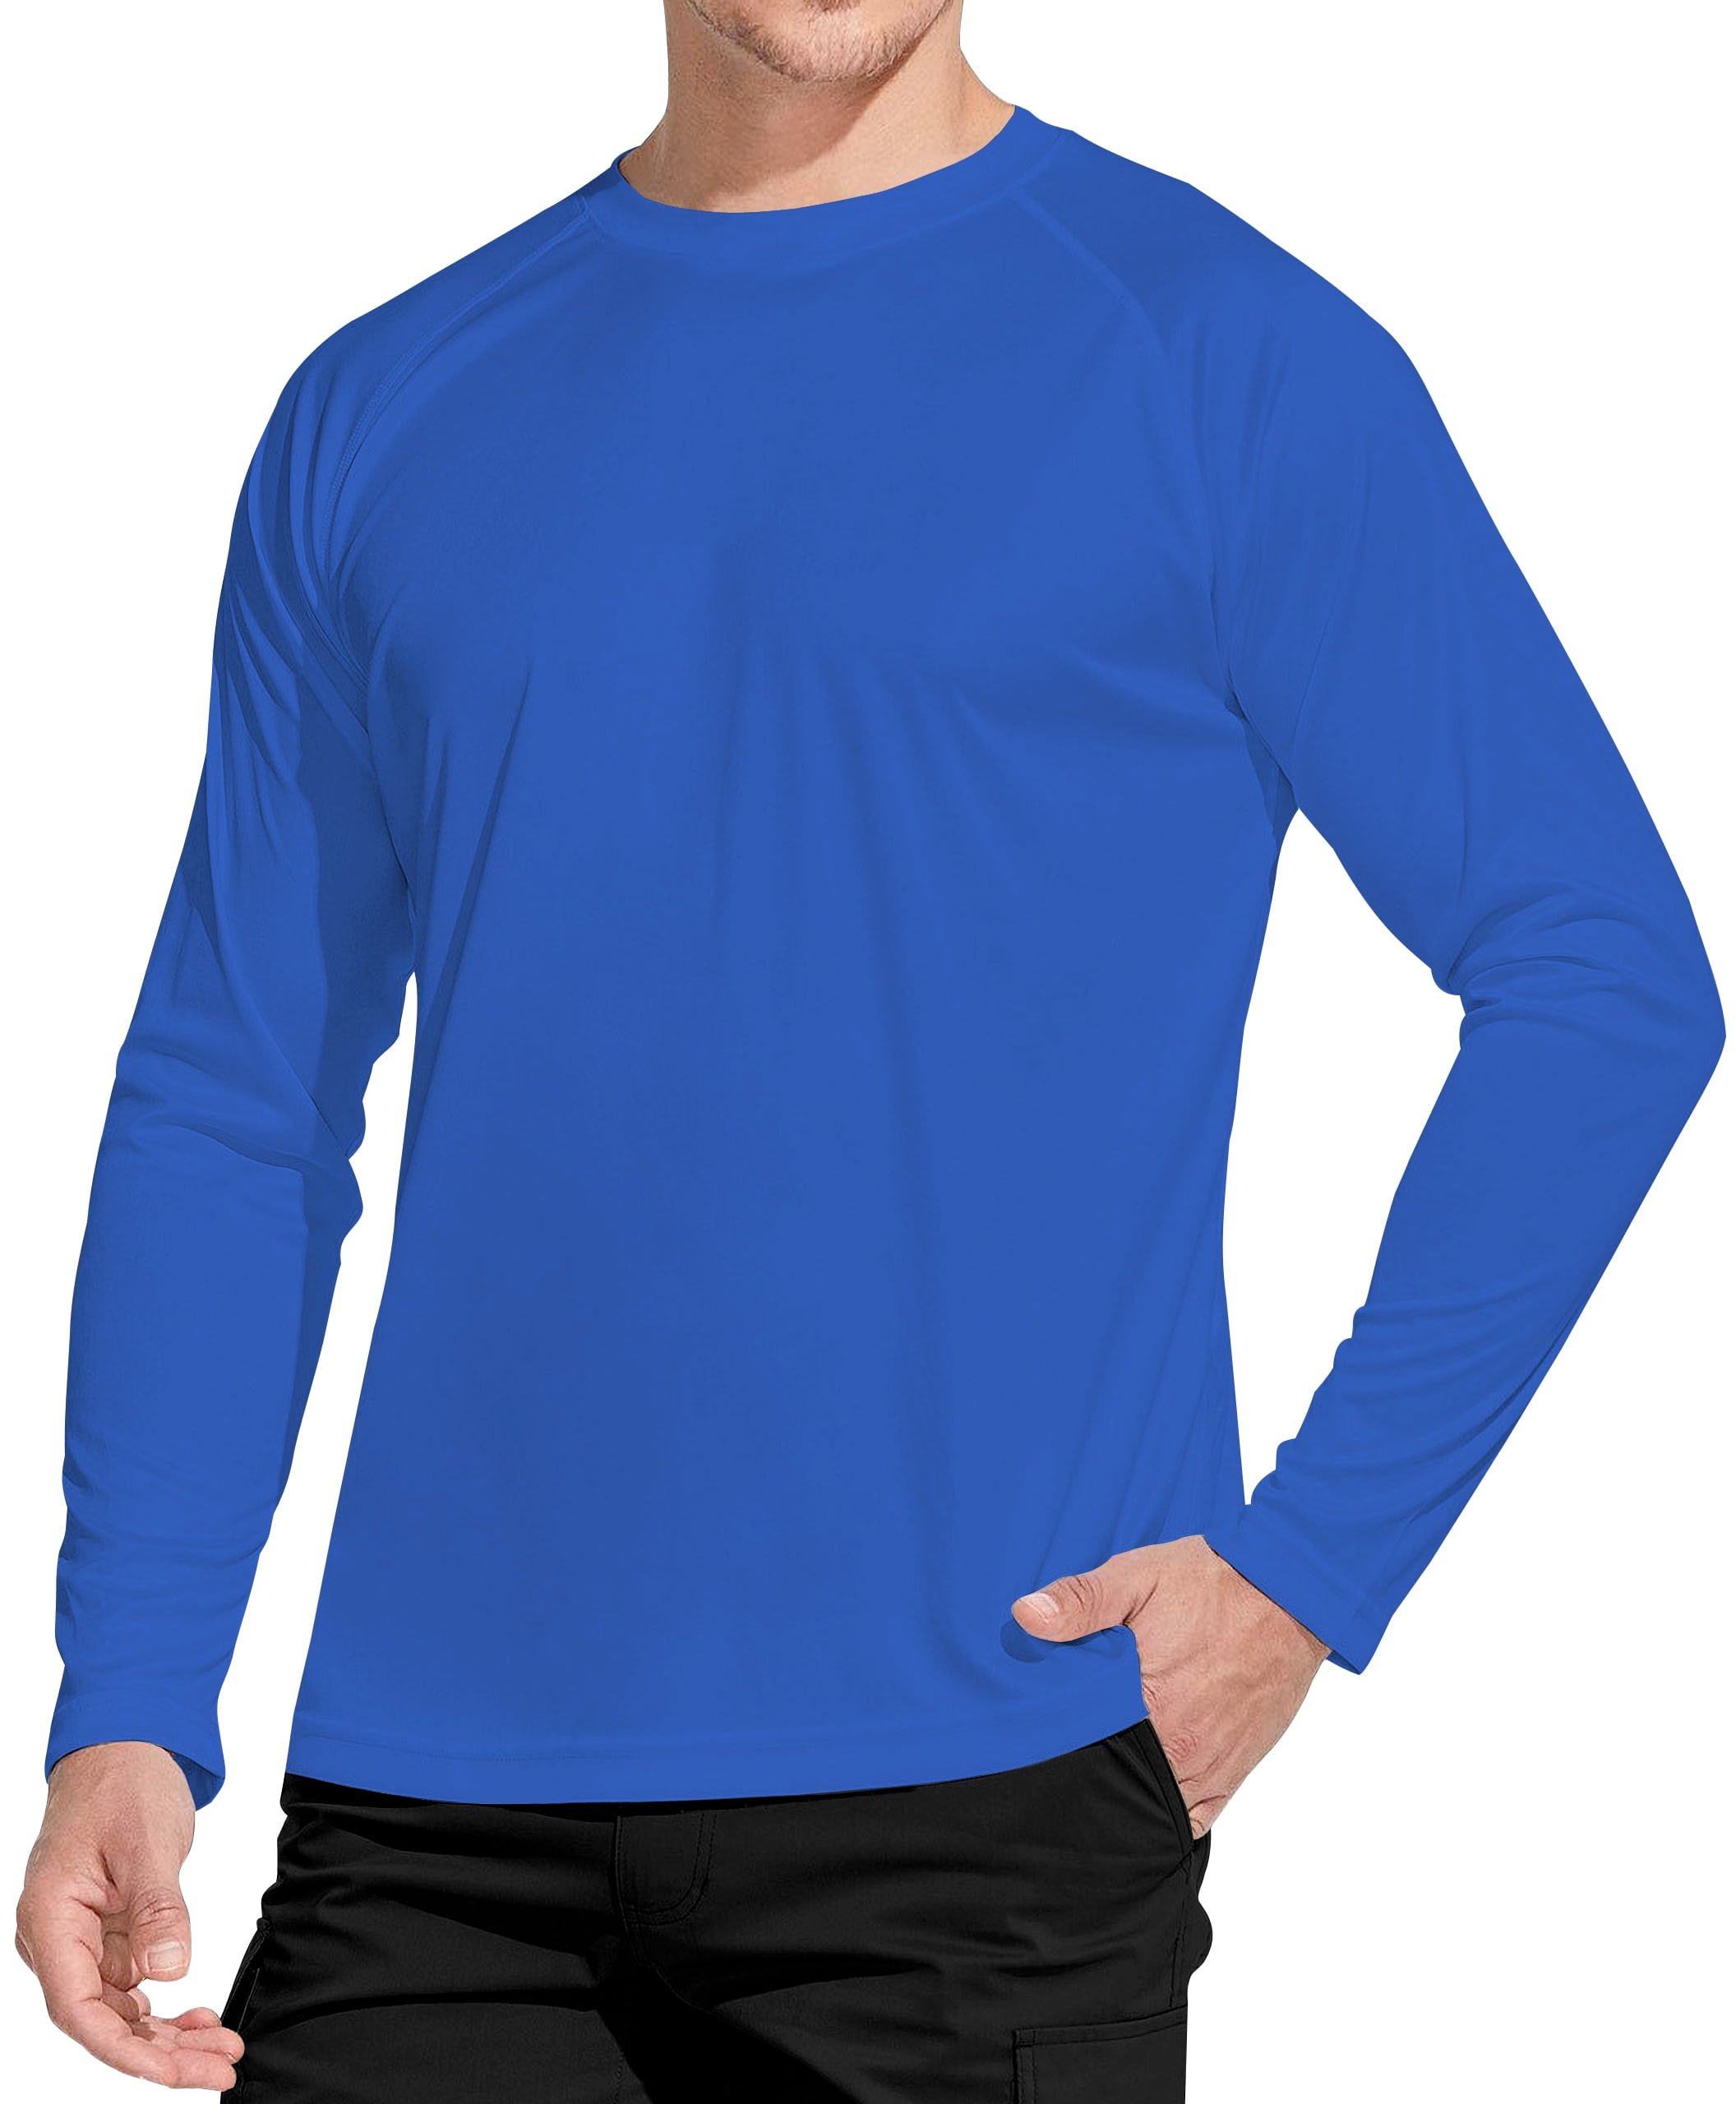 WELIGU Men's Long Sleeve Shirts Lightweight UPF 50+ T-Shirts Fishing Royal  Blue Size Male L 